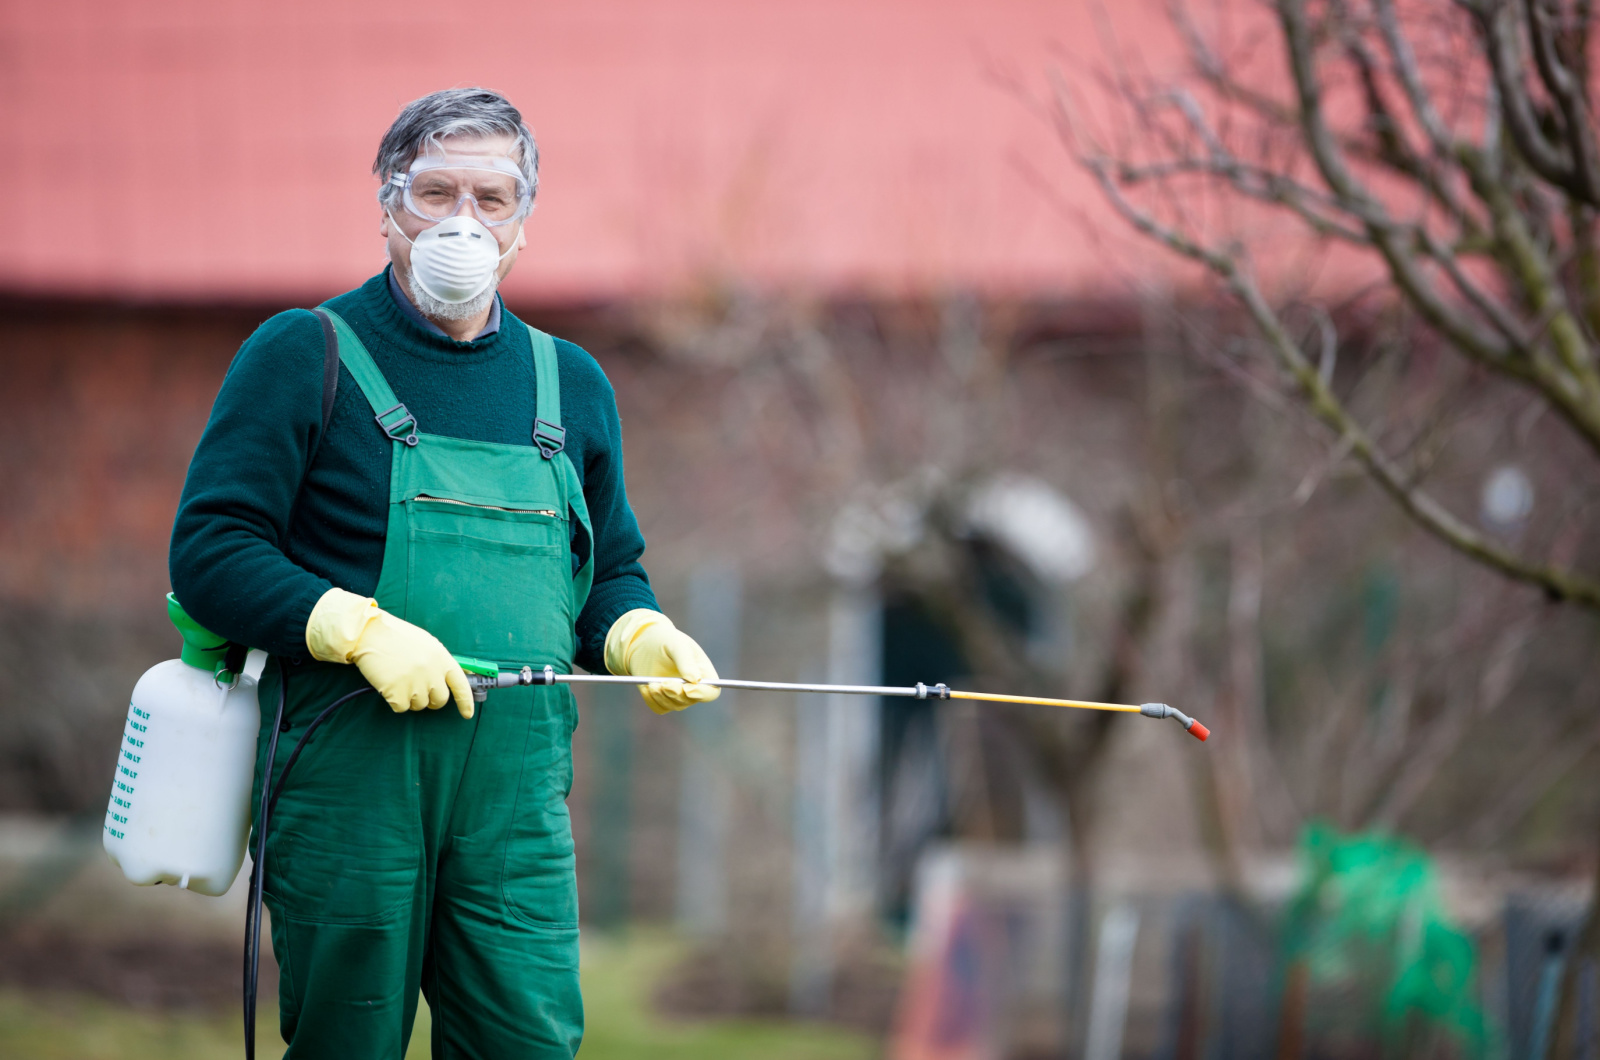 gardener applying an insecticide